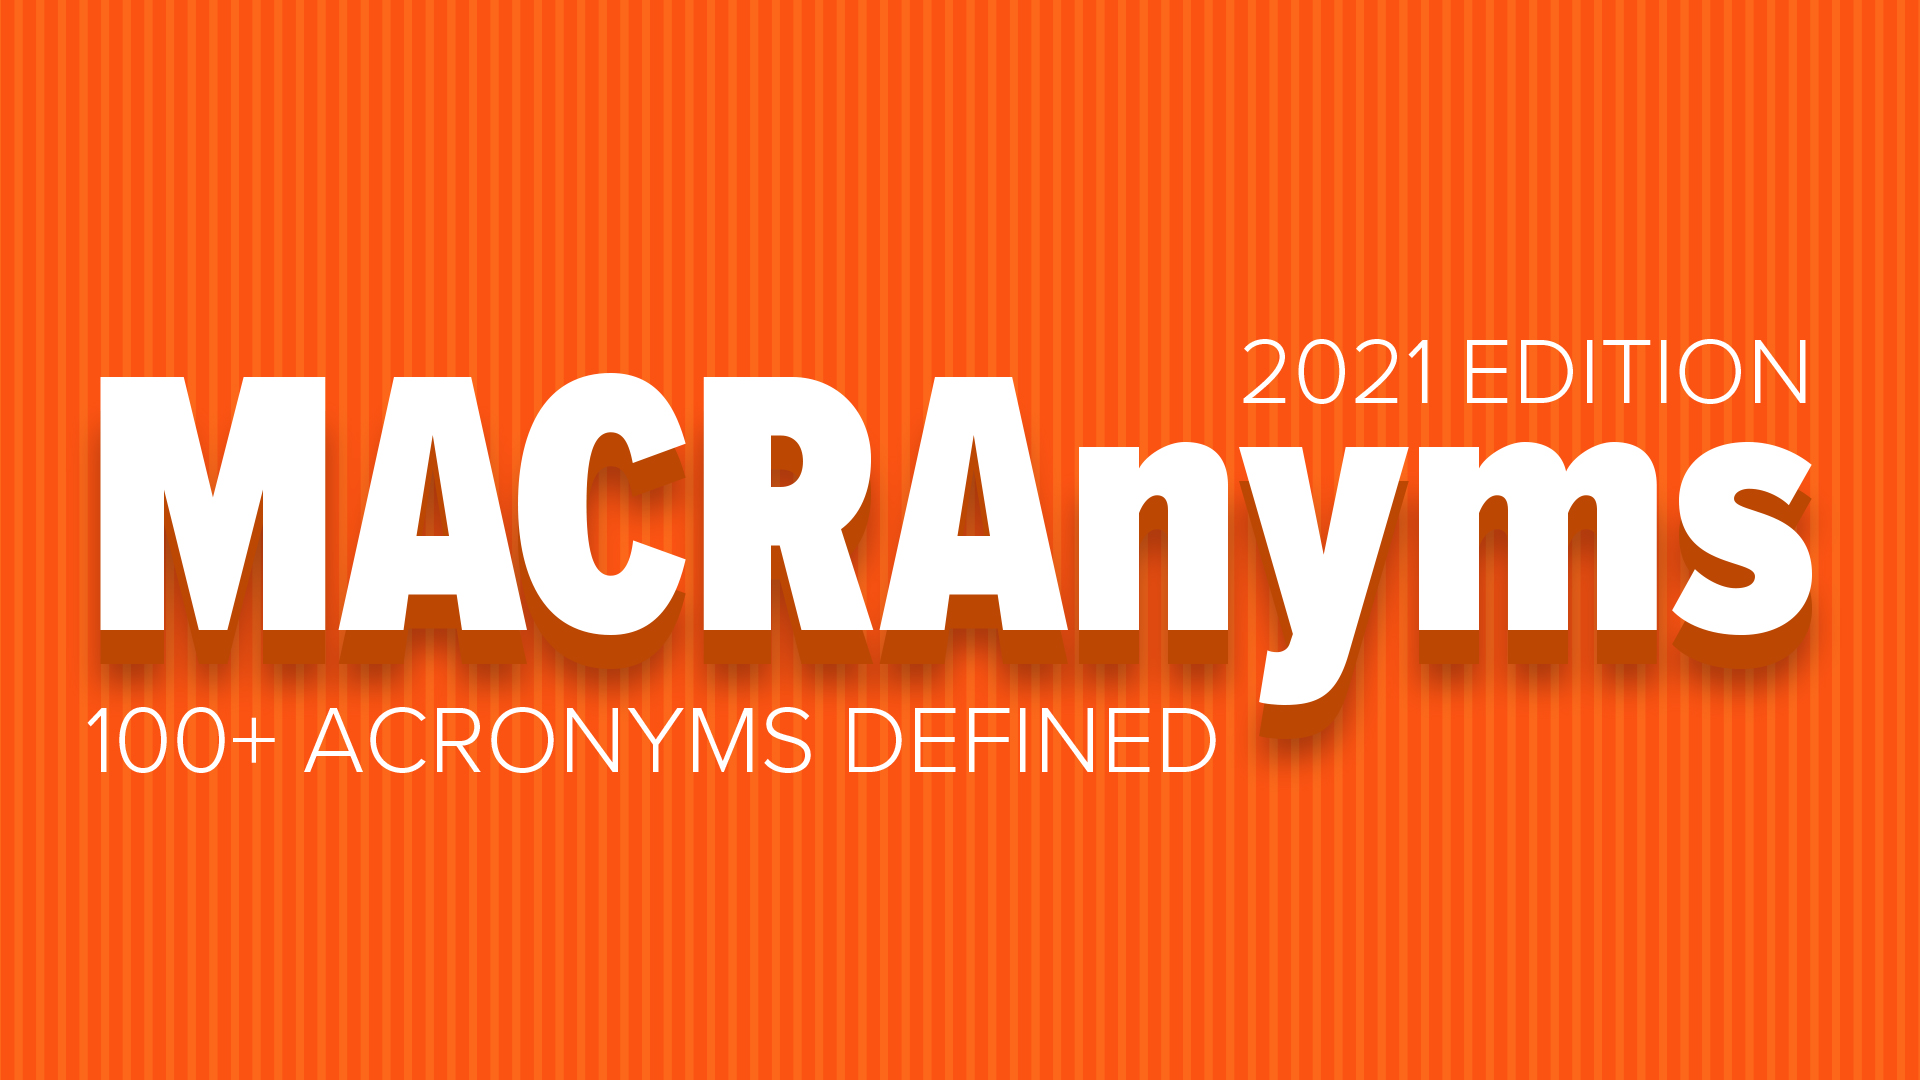 MACRA acronyms 2021 | AdvancedMD